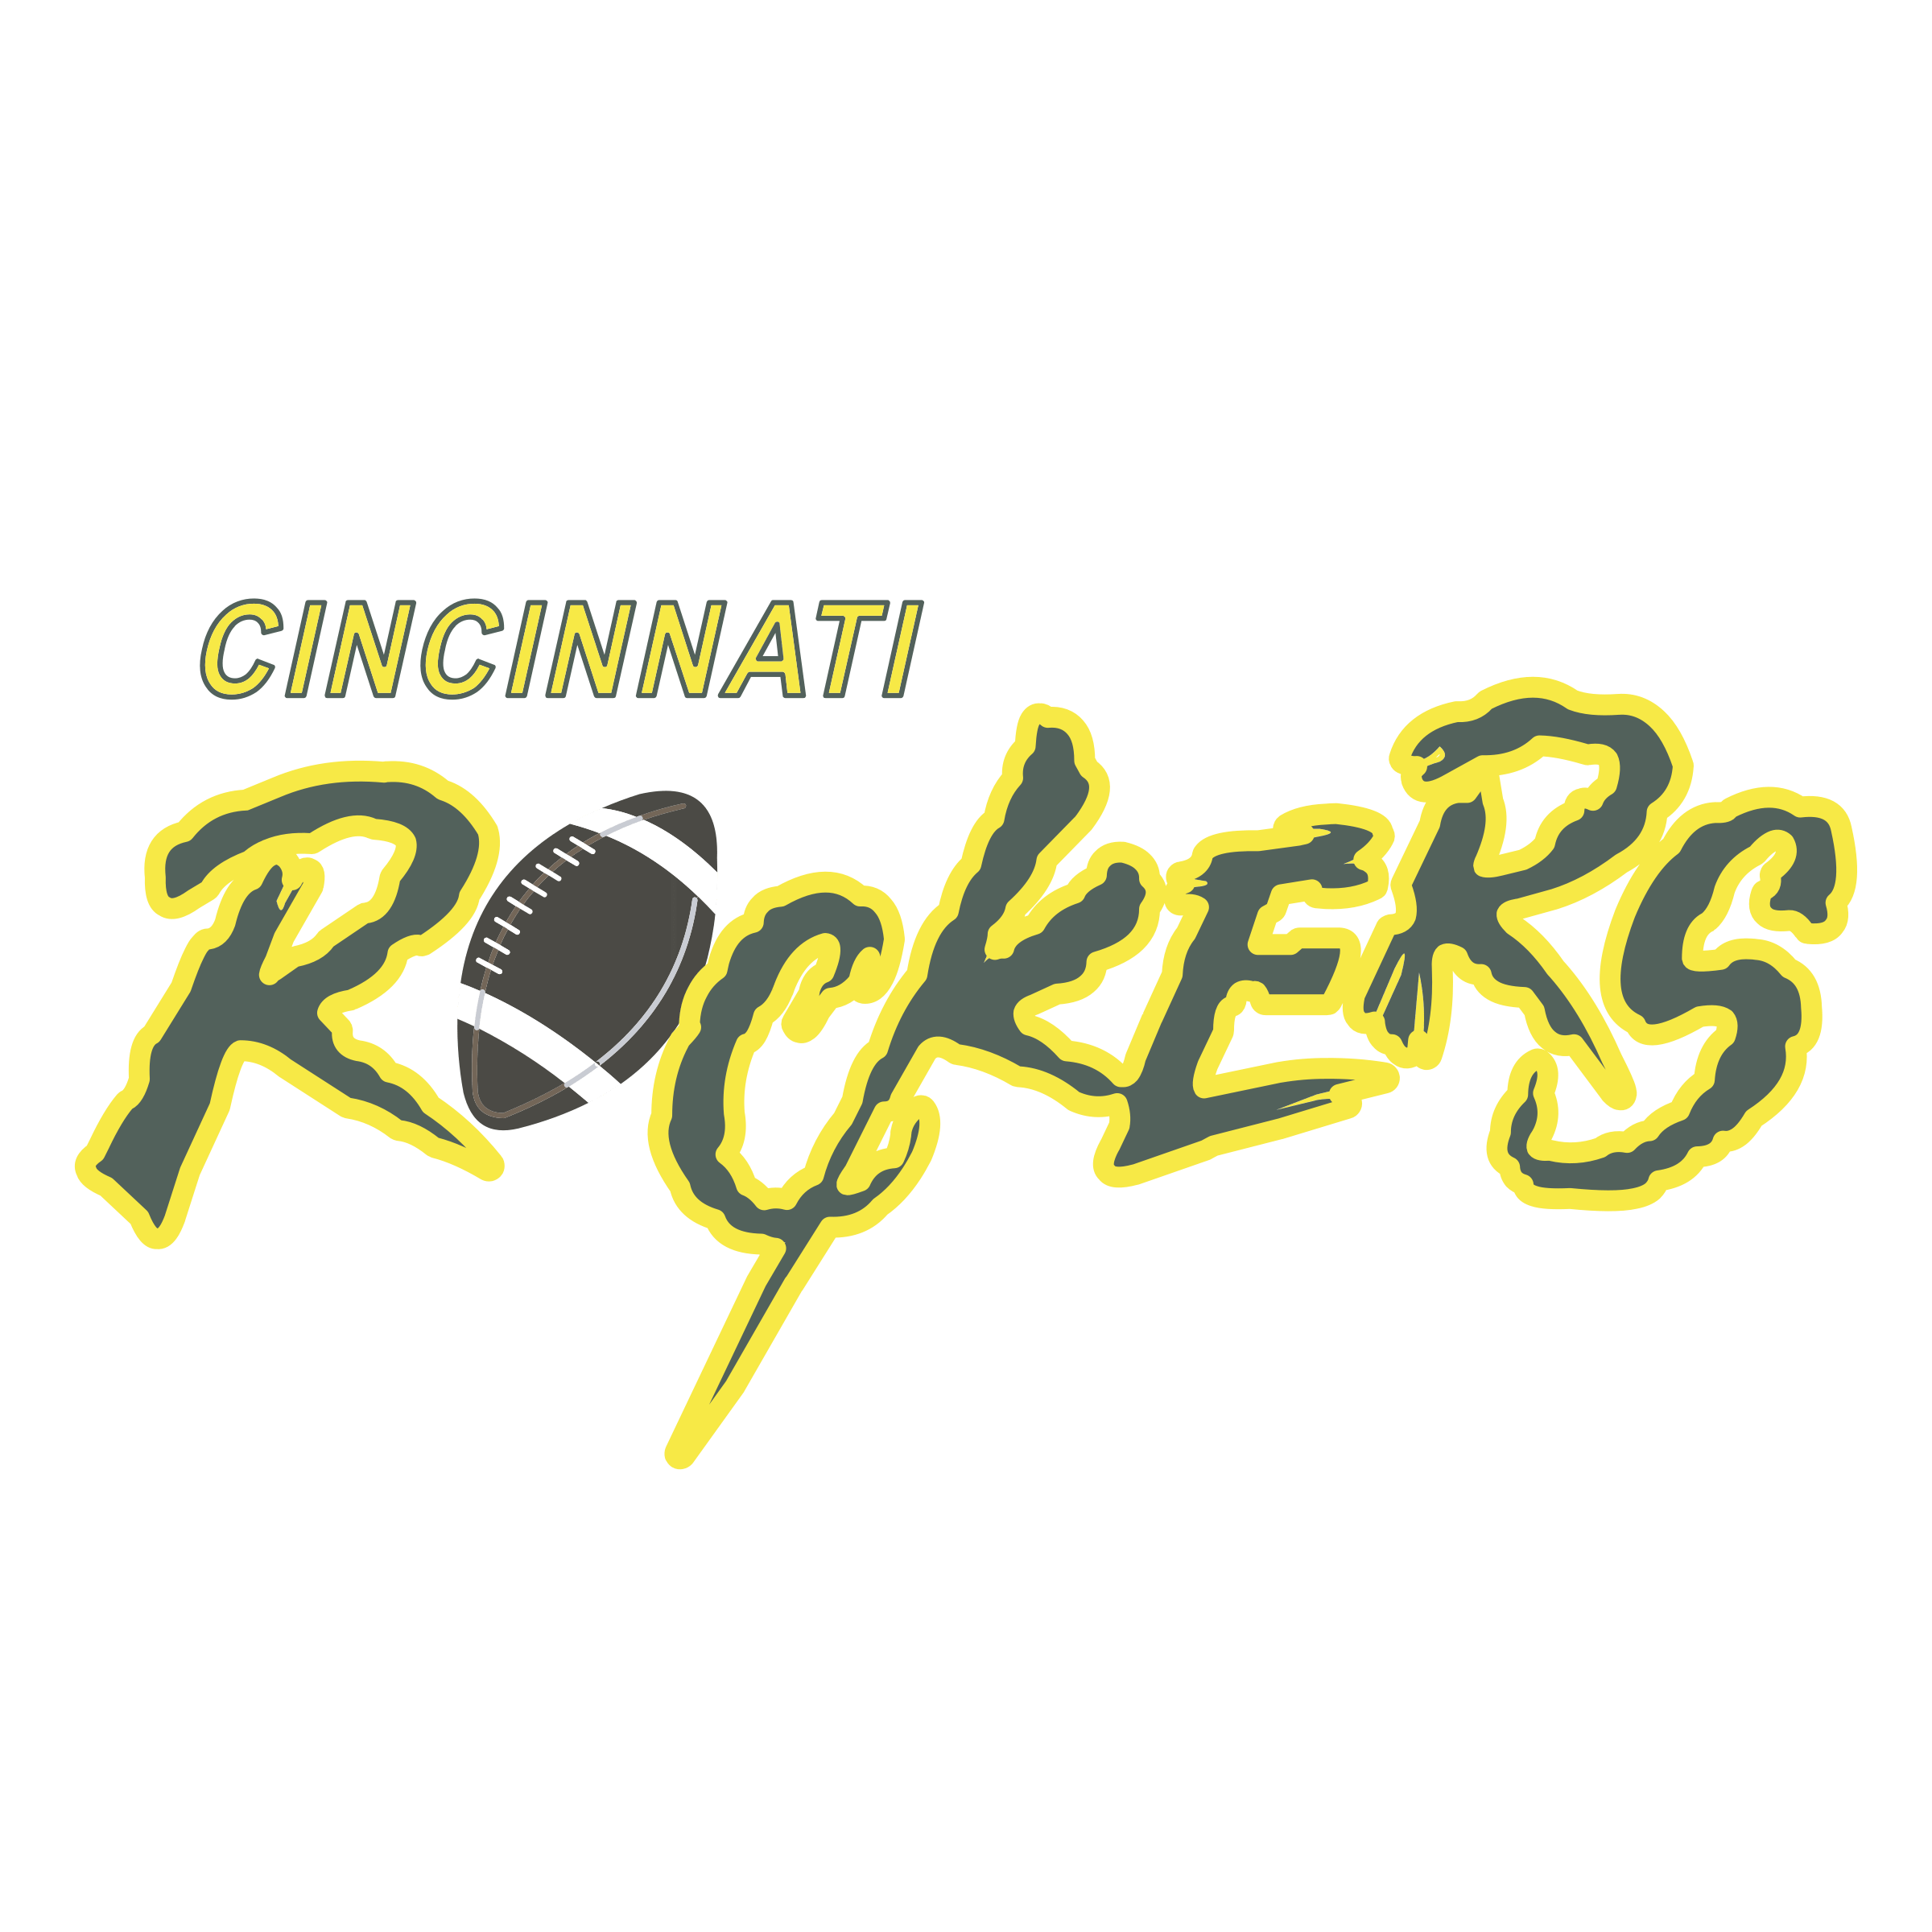 Rockers Logo - Cincinnati Rockers Logo PNG Transparent & SVG Vector